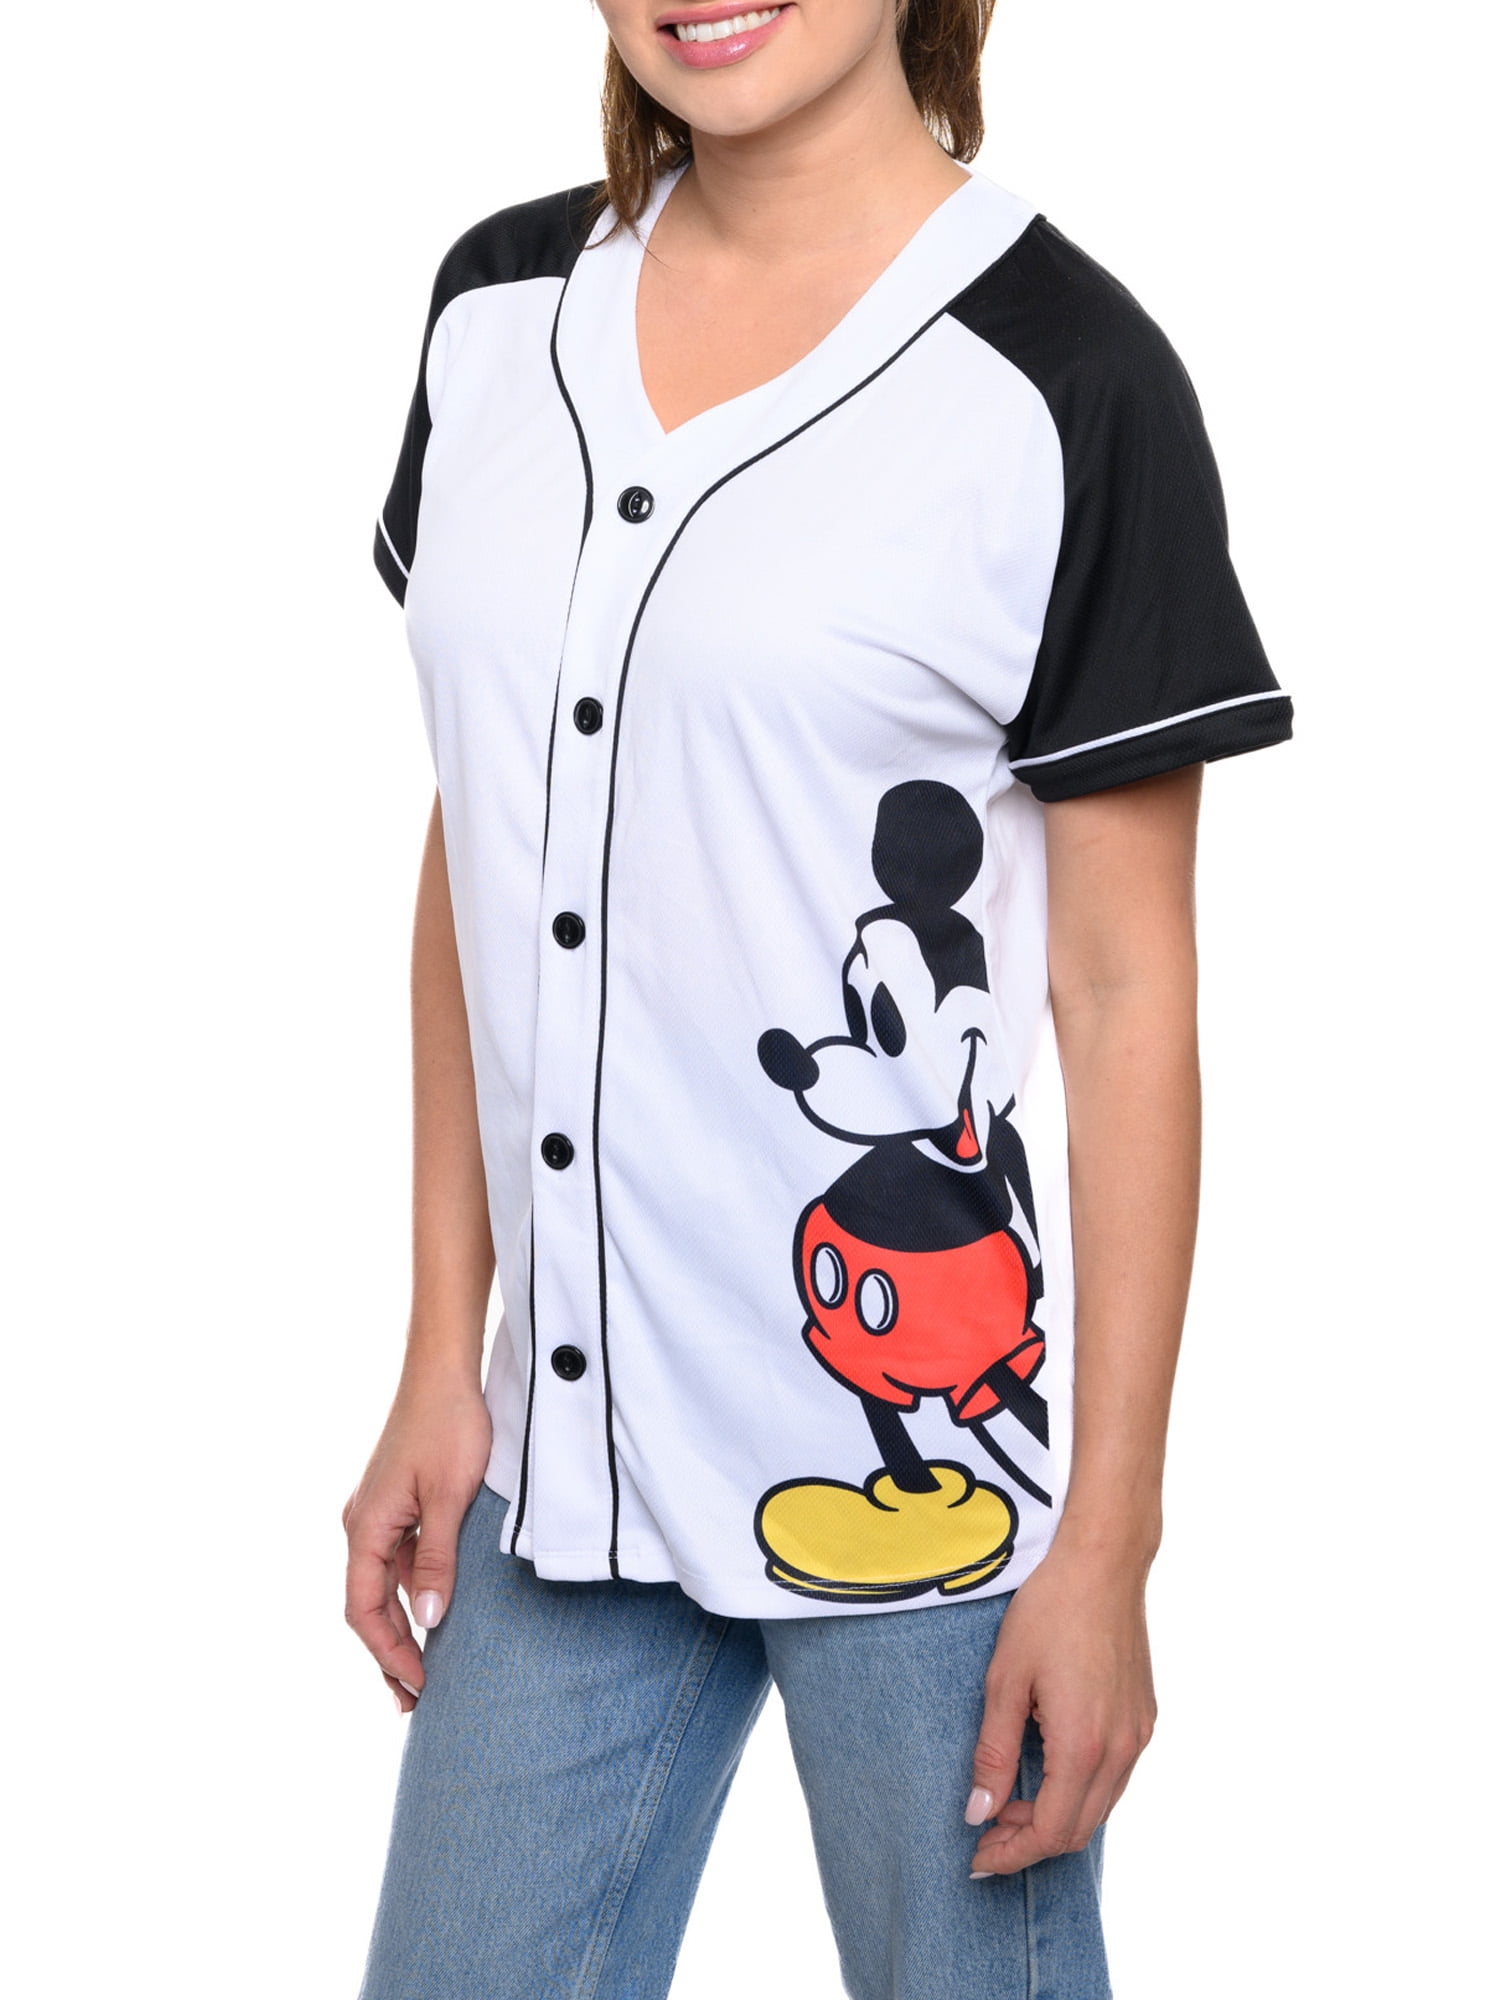 Disney Logo Mickey Mouse Black Custom Name Baseball Jersey Disney